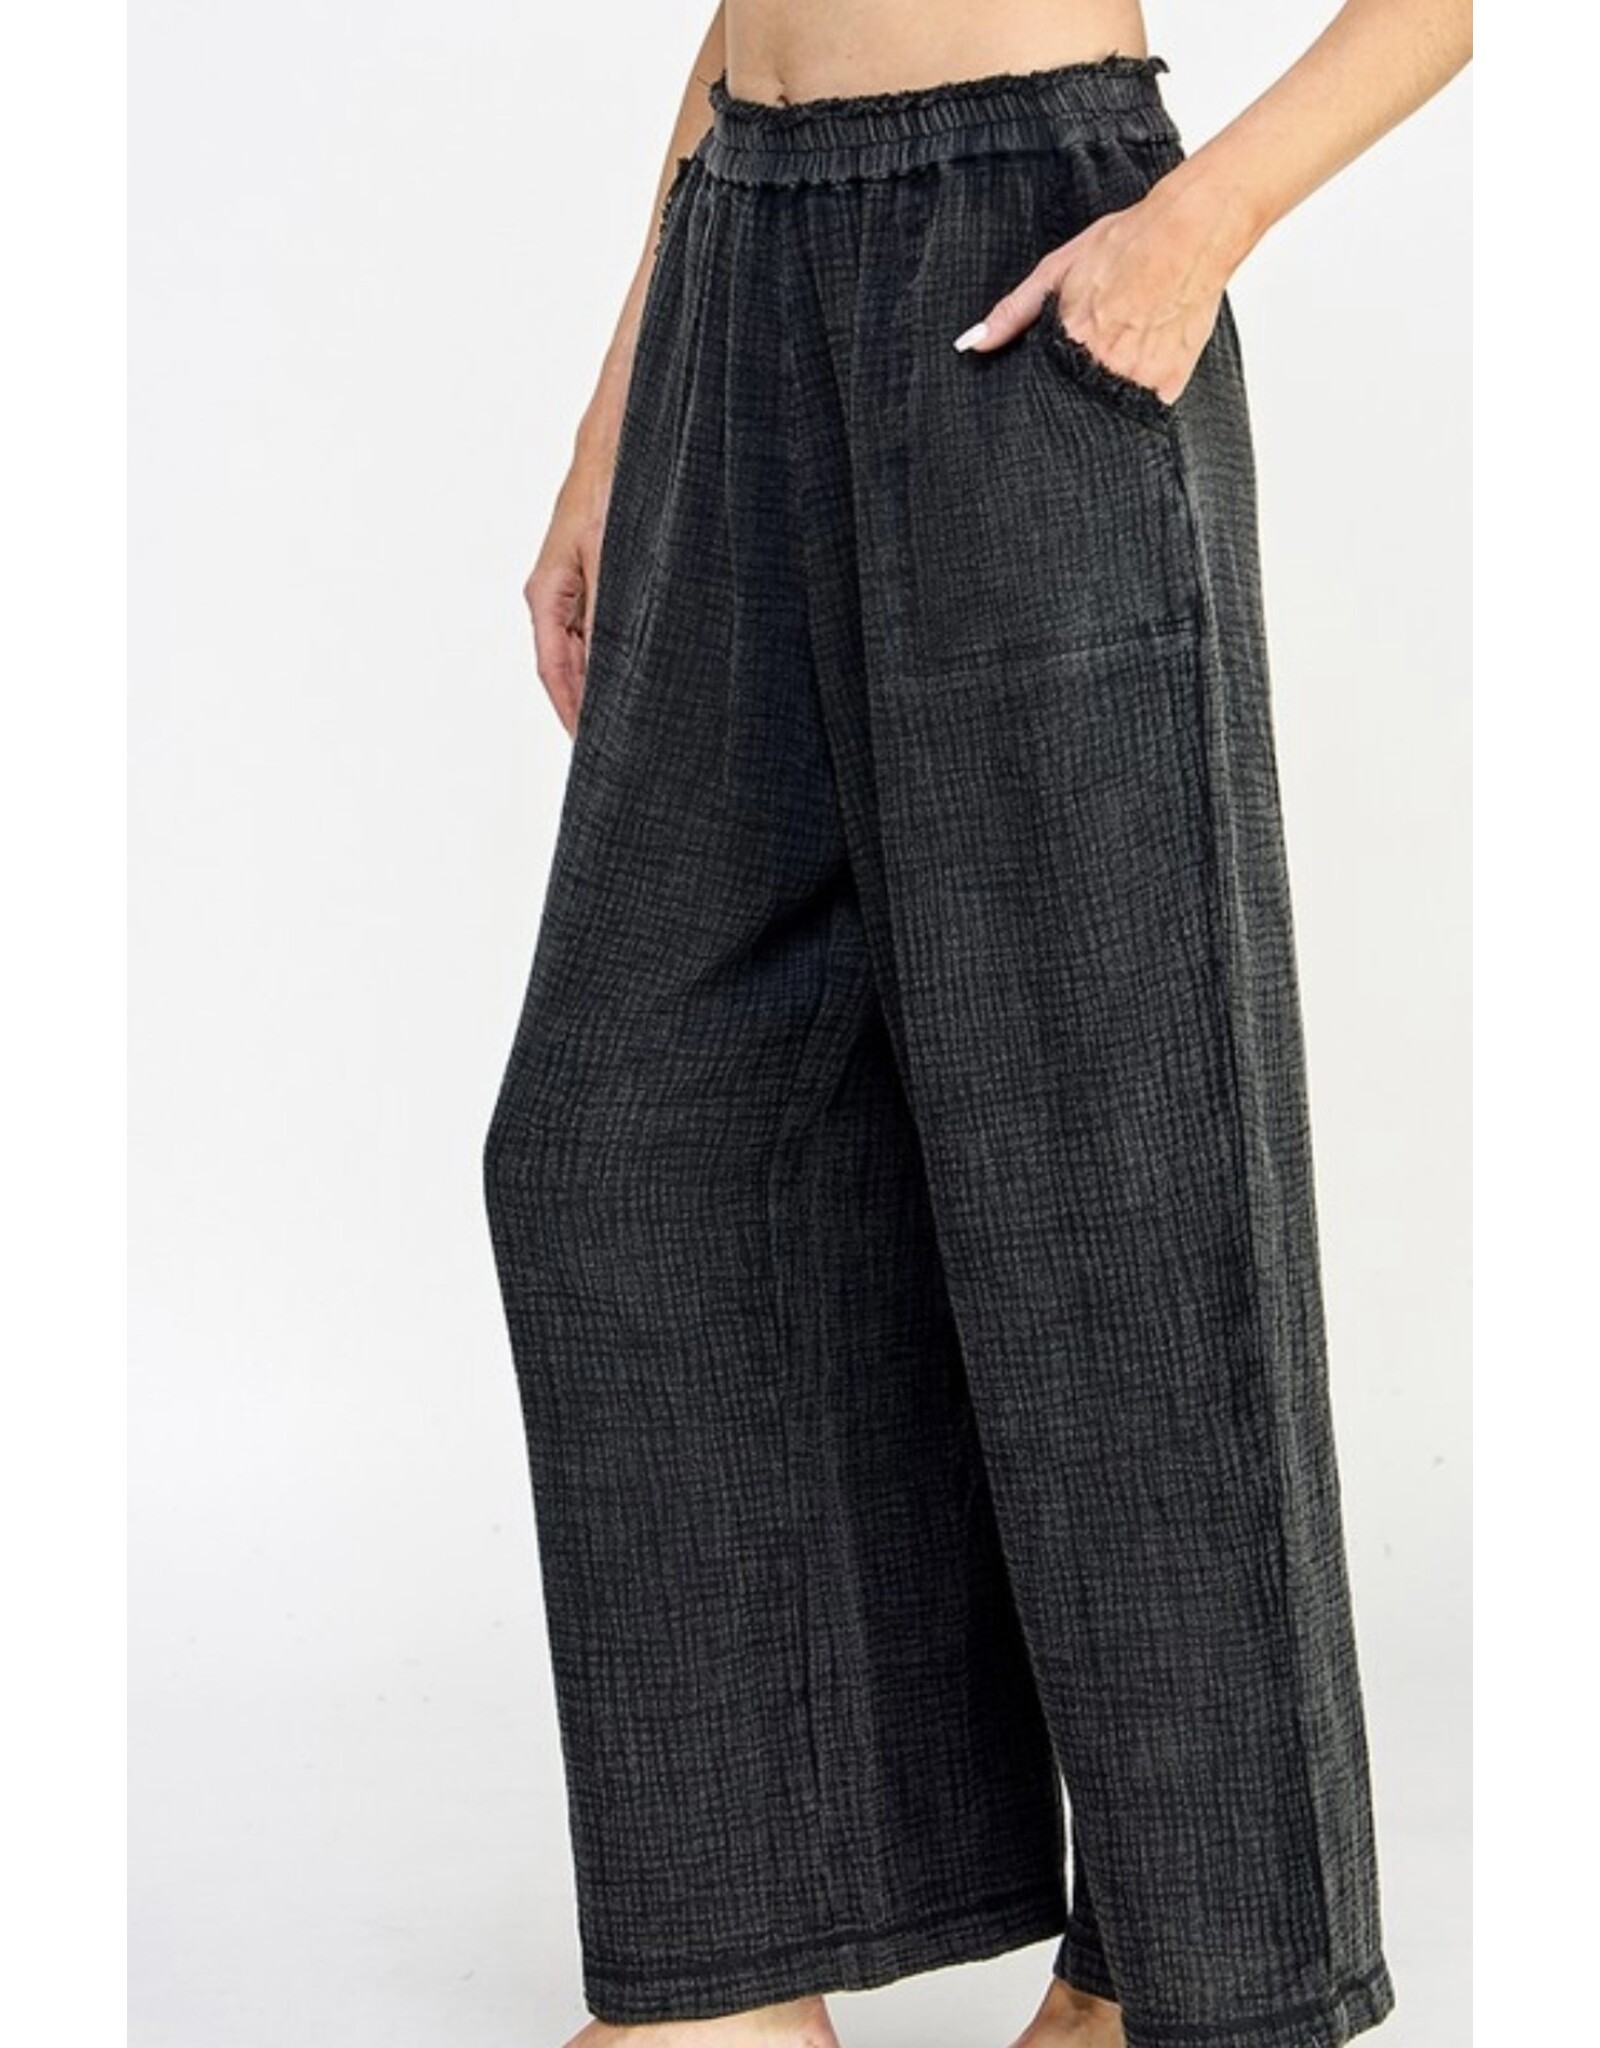 https://cdn.shoplightspeed.com/shops/617544/files/56712856/1600x2048x2/lata-black-cotton-gauze-wide-leg-pants.jpg